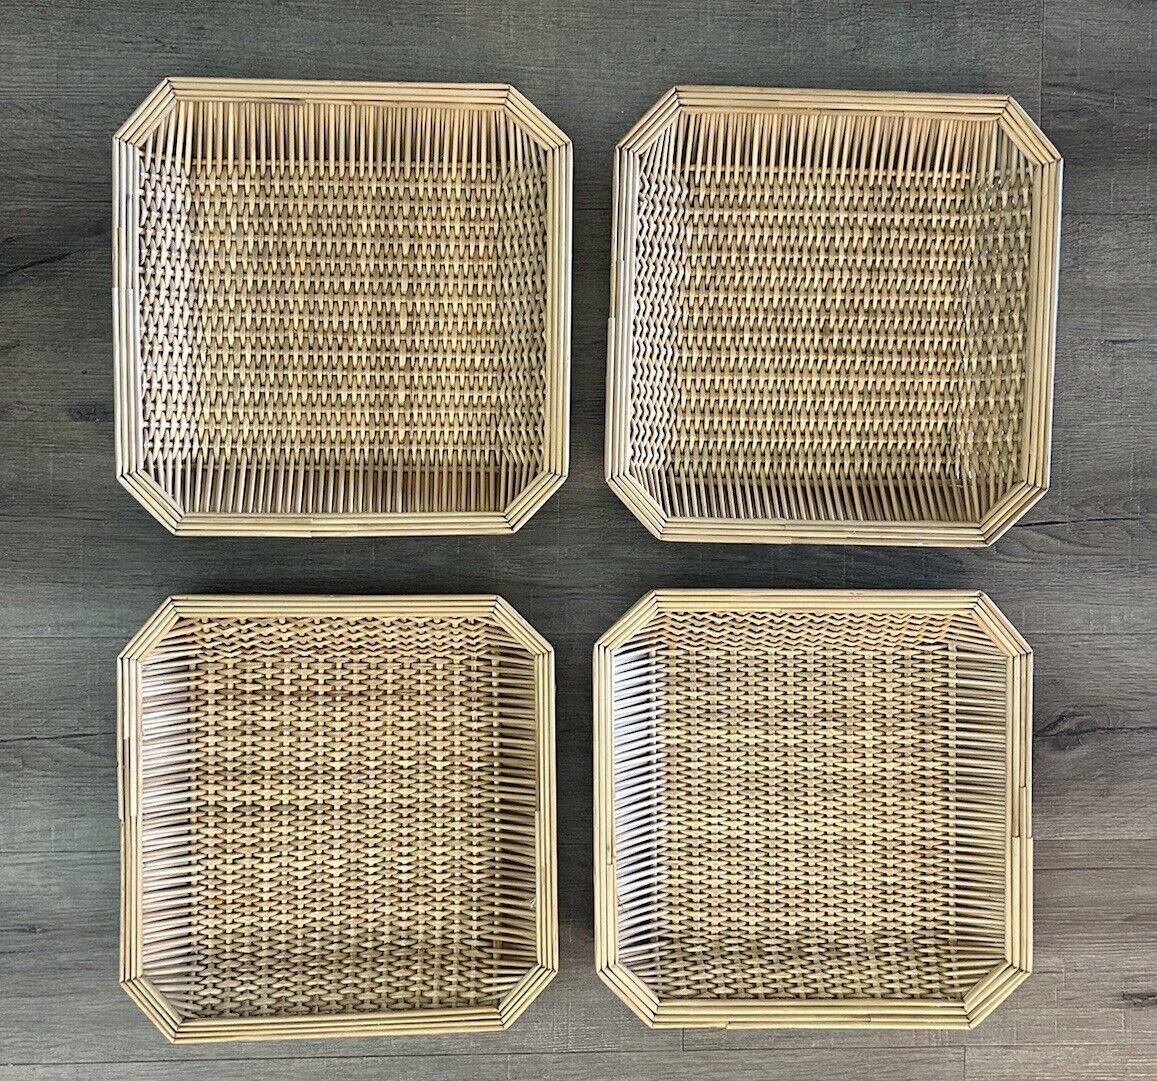 4 Woven Wicker Tray Basket Wall Home Decor Coffee Table Organization 14 X 14 EC